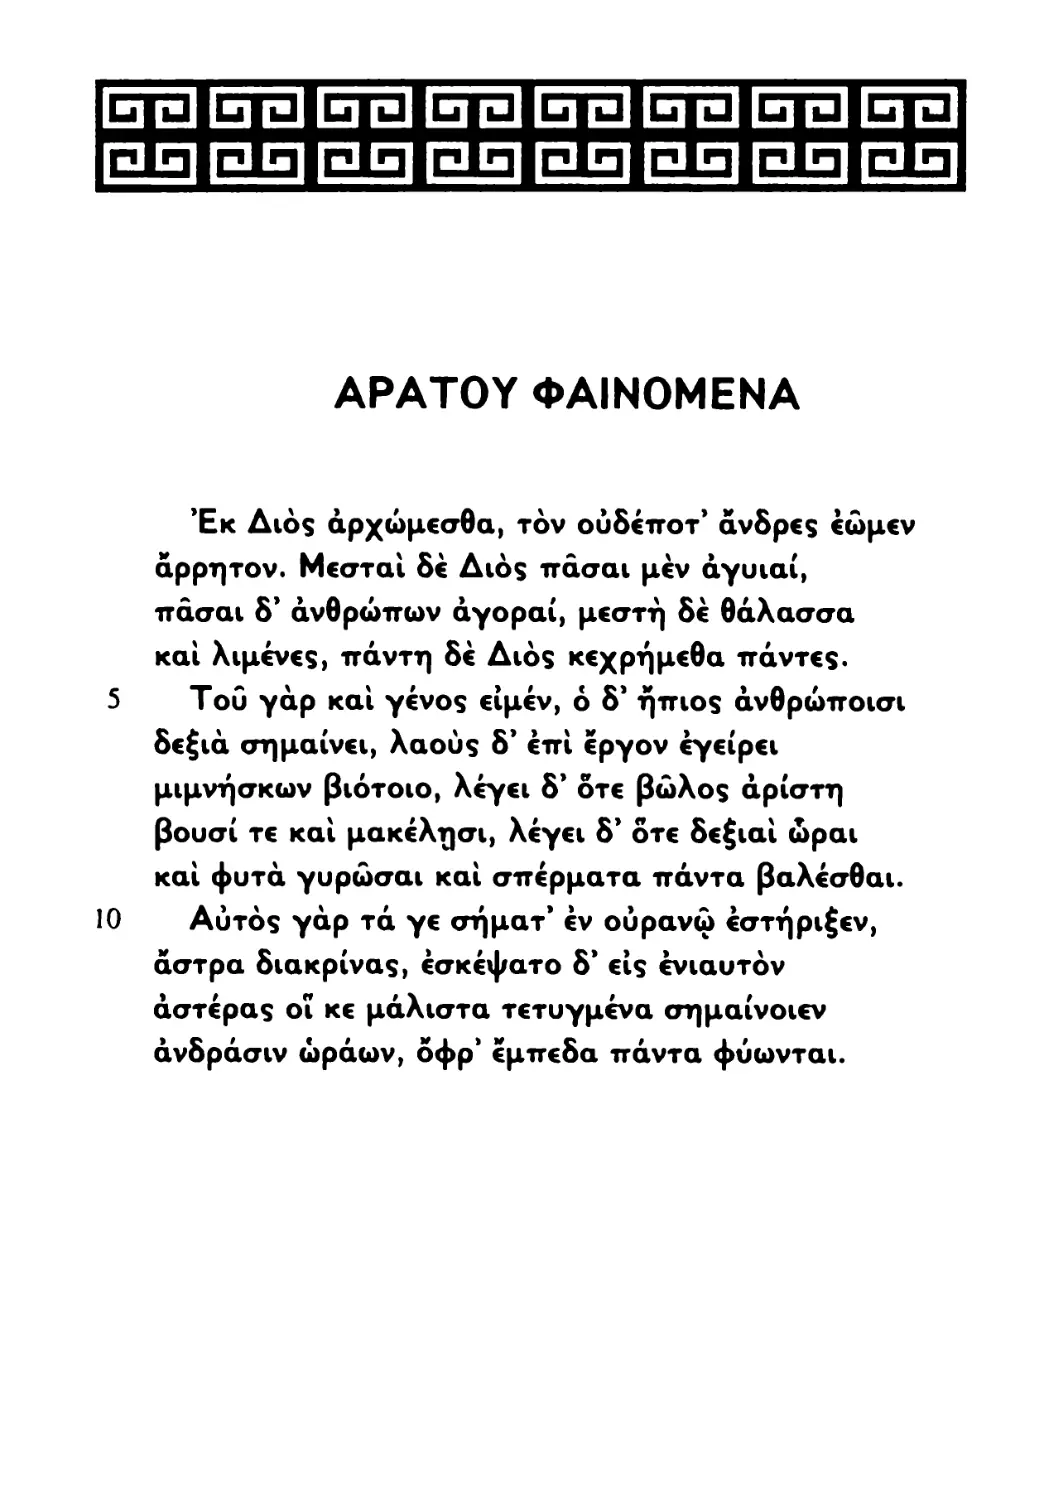 Греческий текст